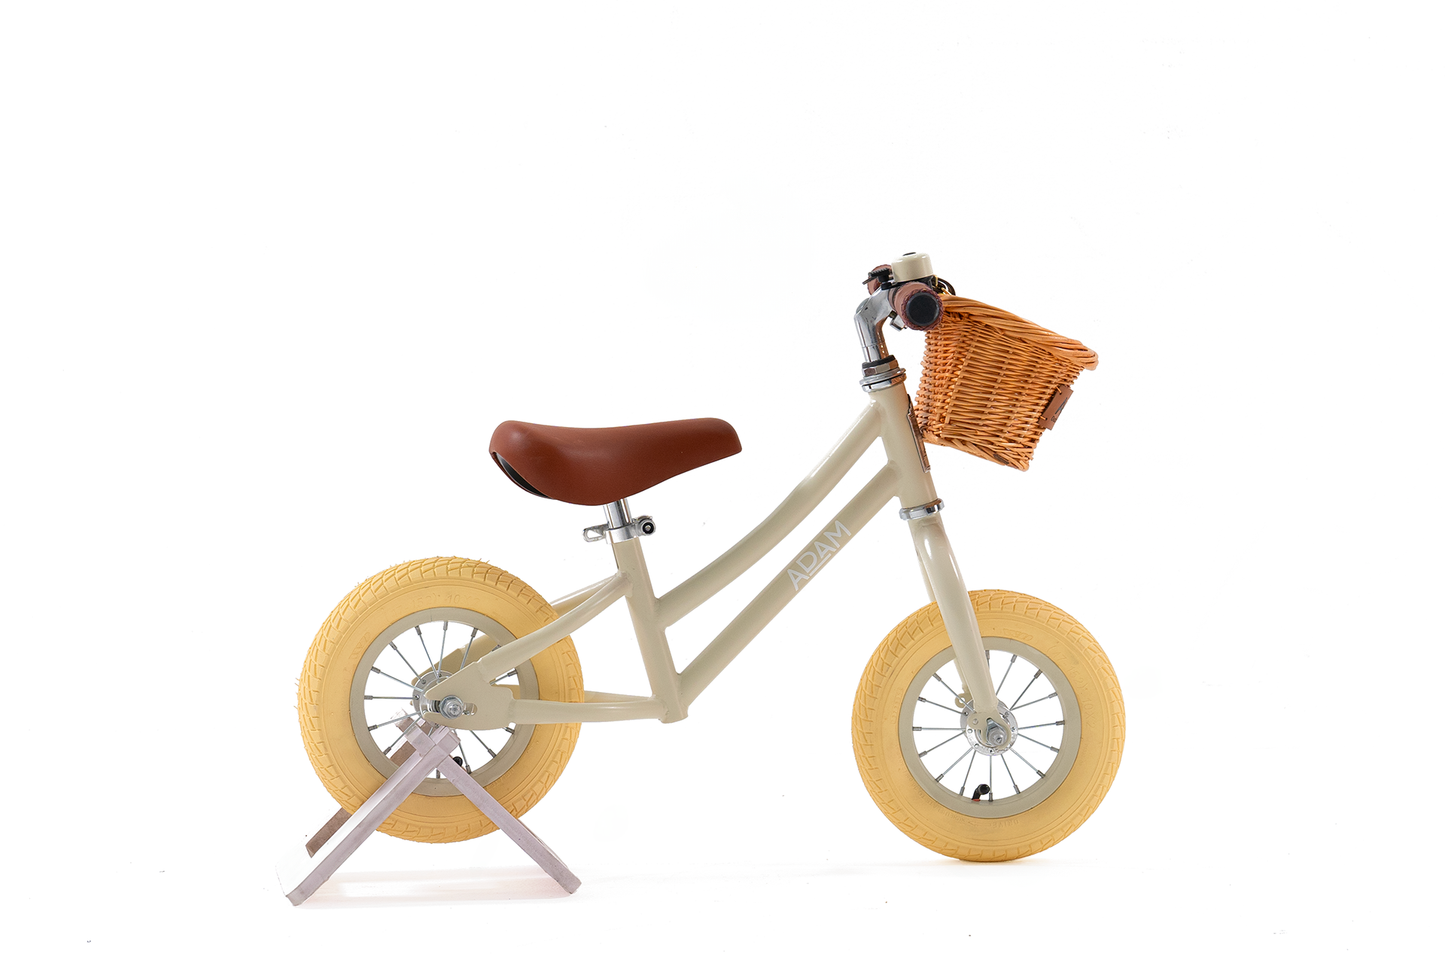 The Baby Adam 10"- Balance bike for young children